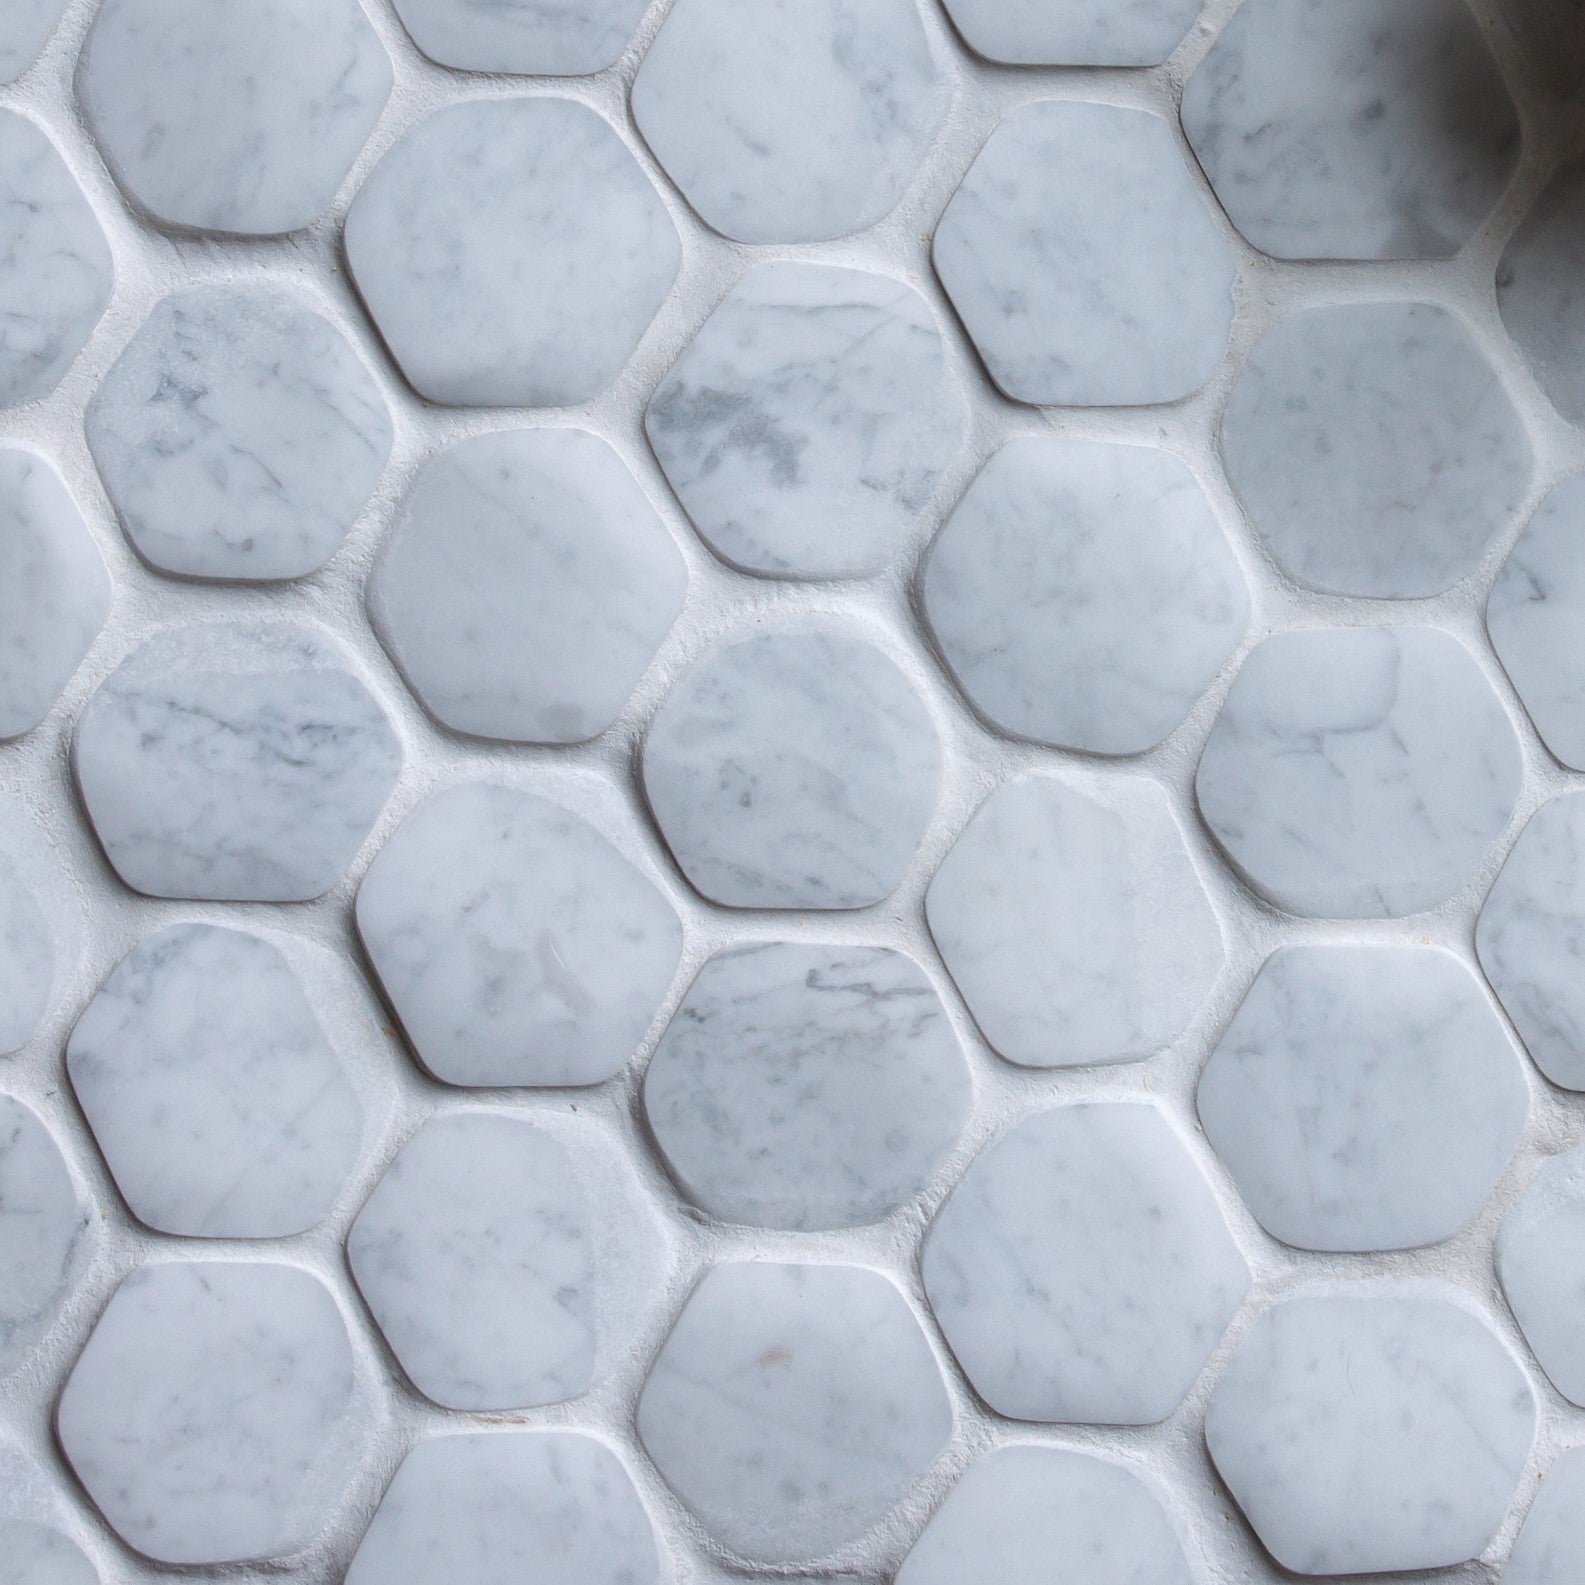 giovanni barbieri timeworn carrara natural white marble hexagon pattern mosaic distributed by surface group international